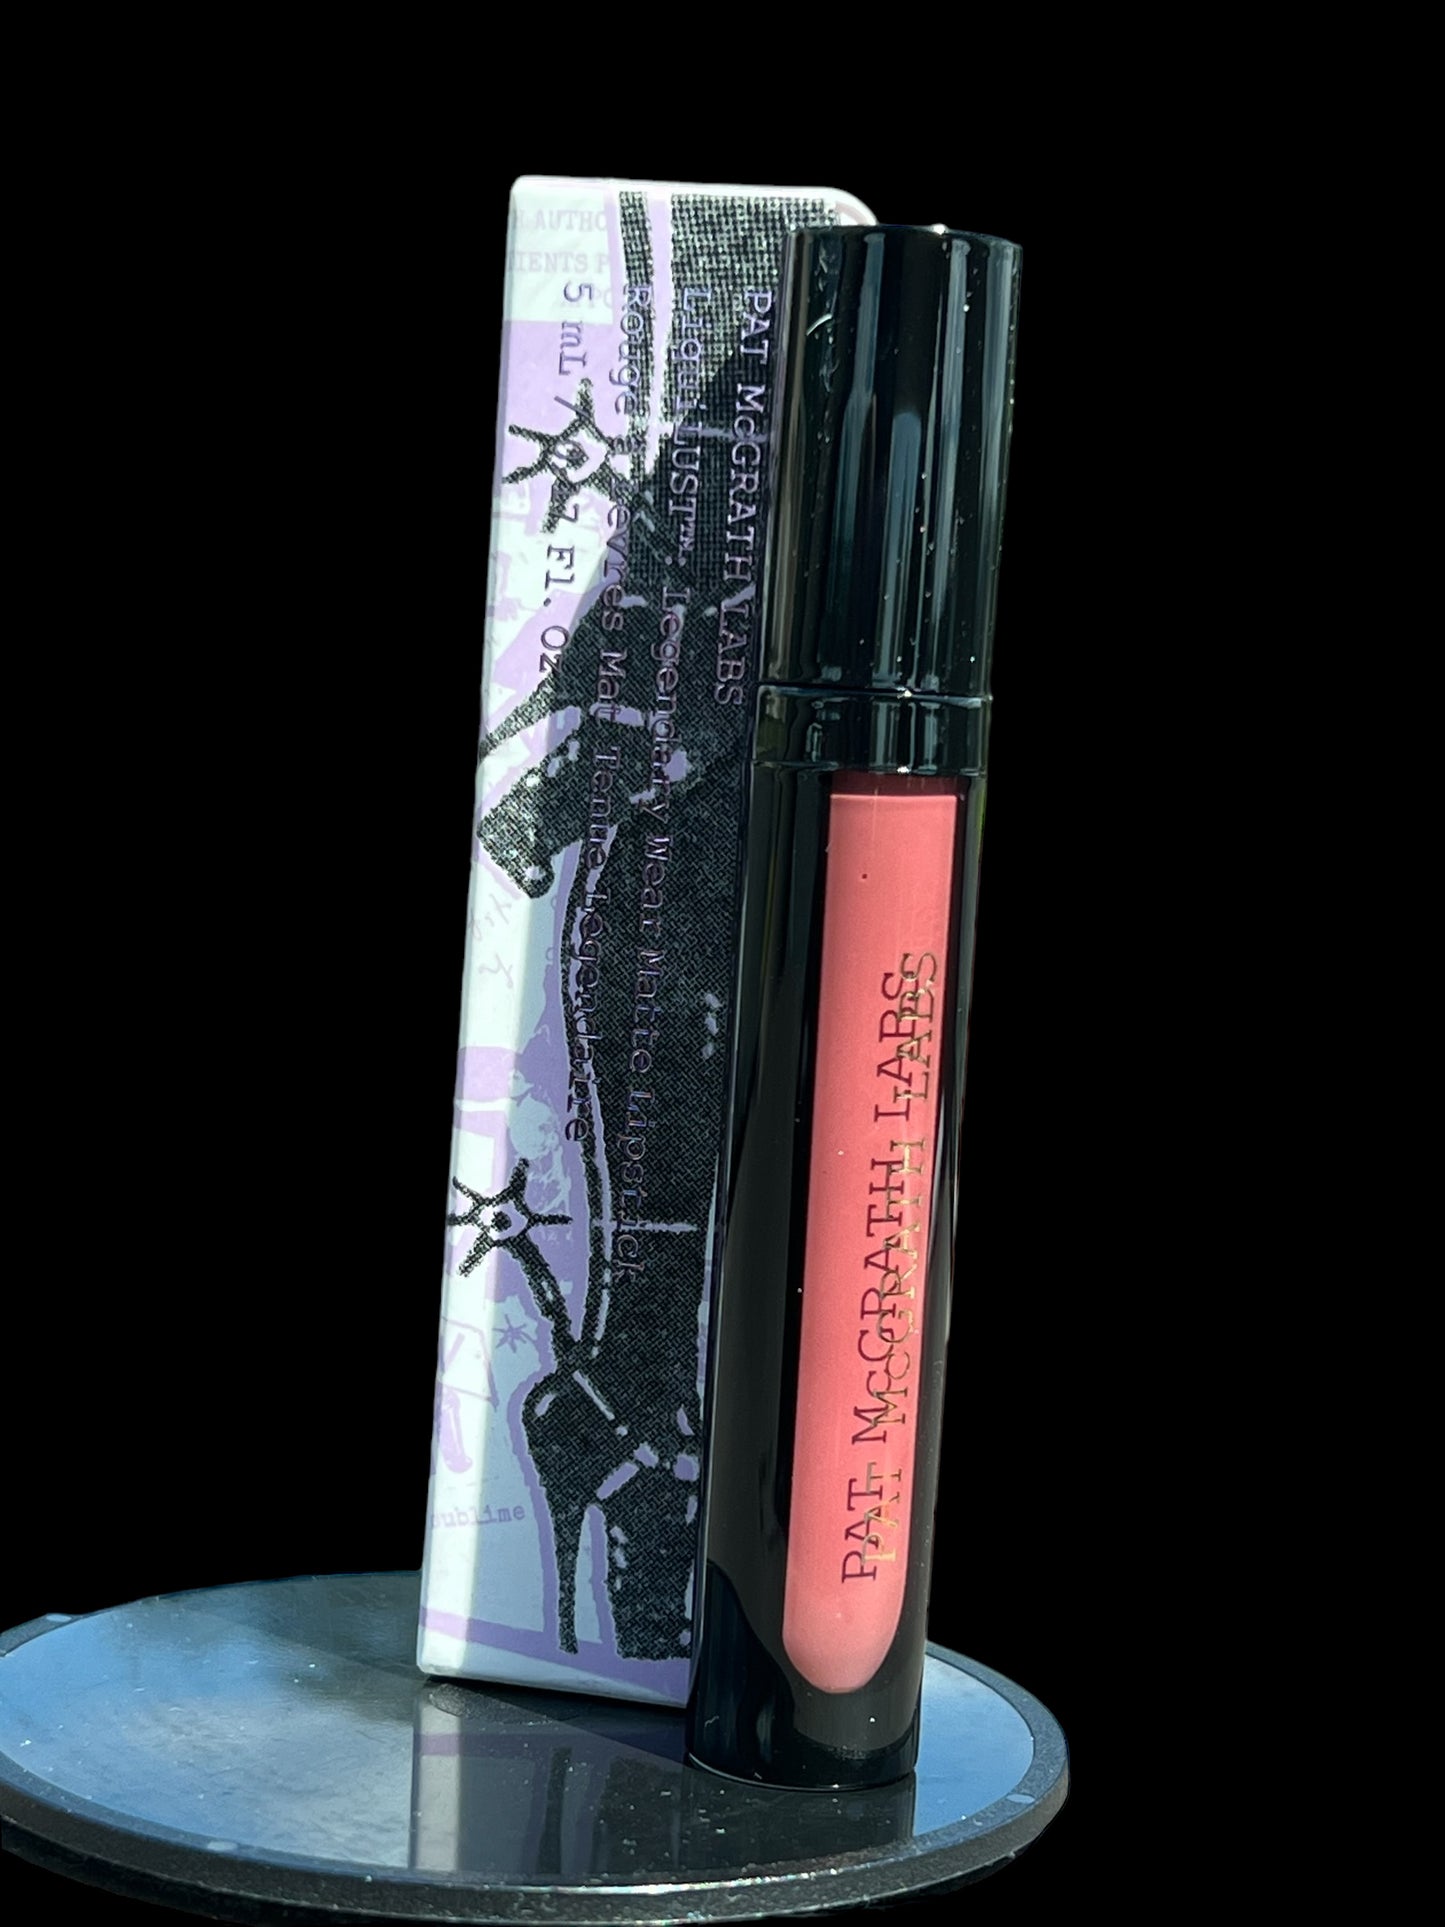 LiquiLUST™  Legendary Wear Lipstick in DIVINE ROSE